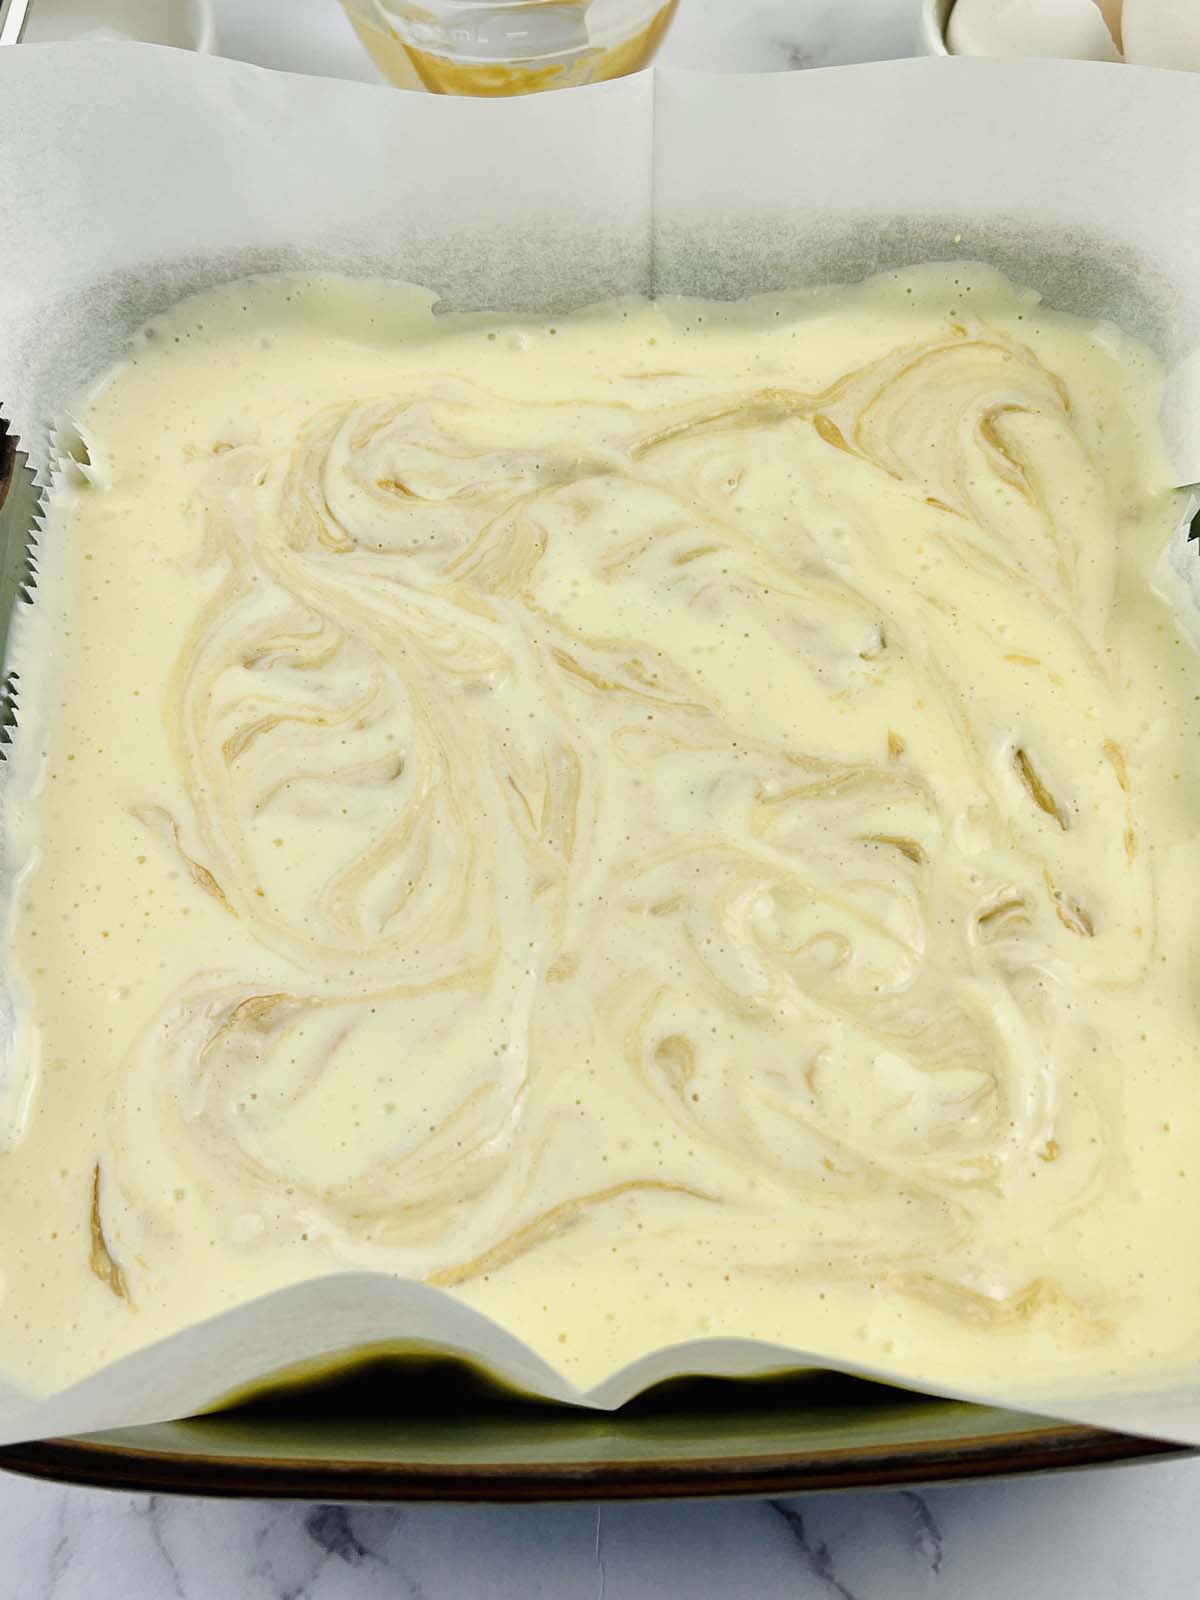 Biscoff mixture swirled into cheesecake mixture.